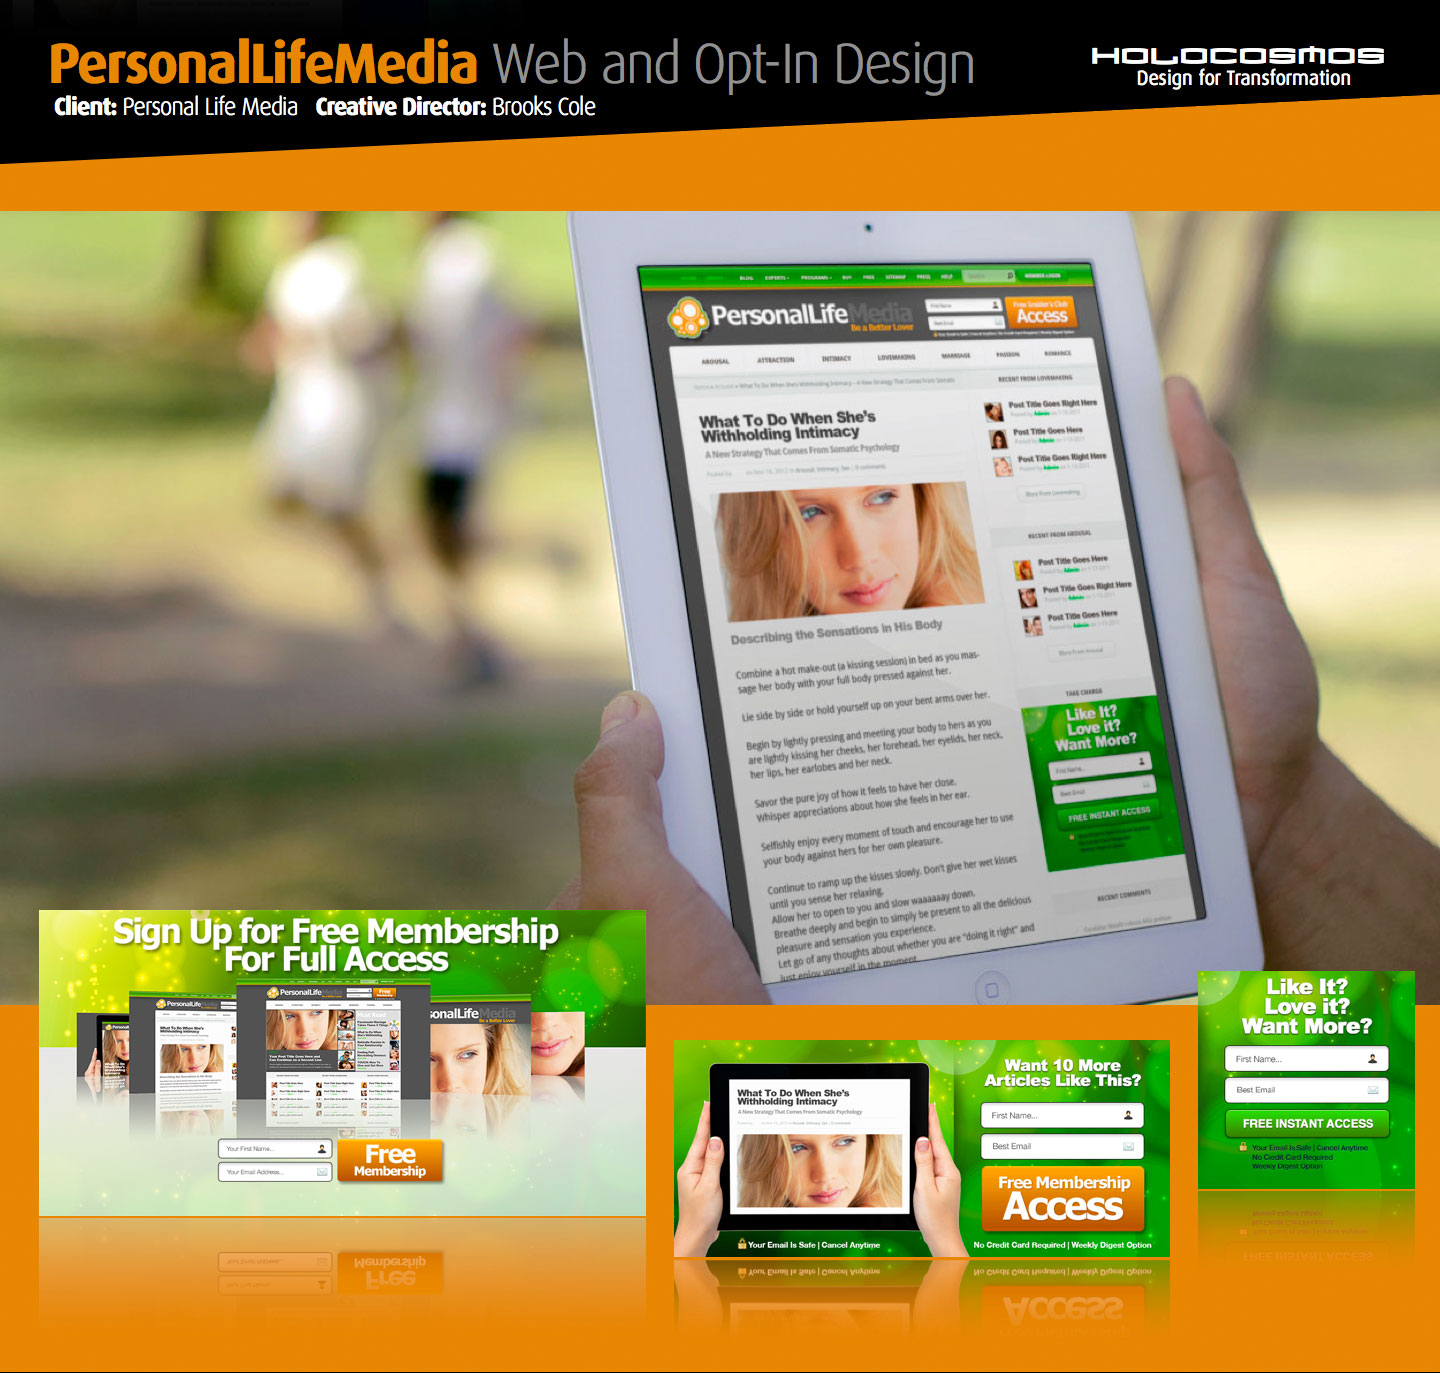 PersonalLifeMedia-Web-Optin-Design-By-HoloCosmos